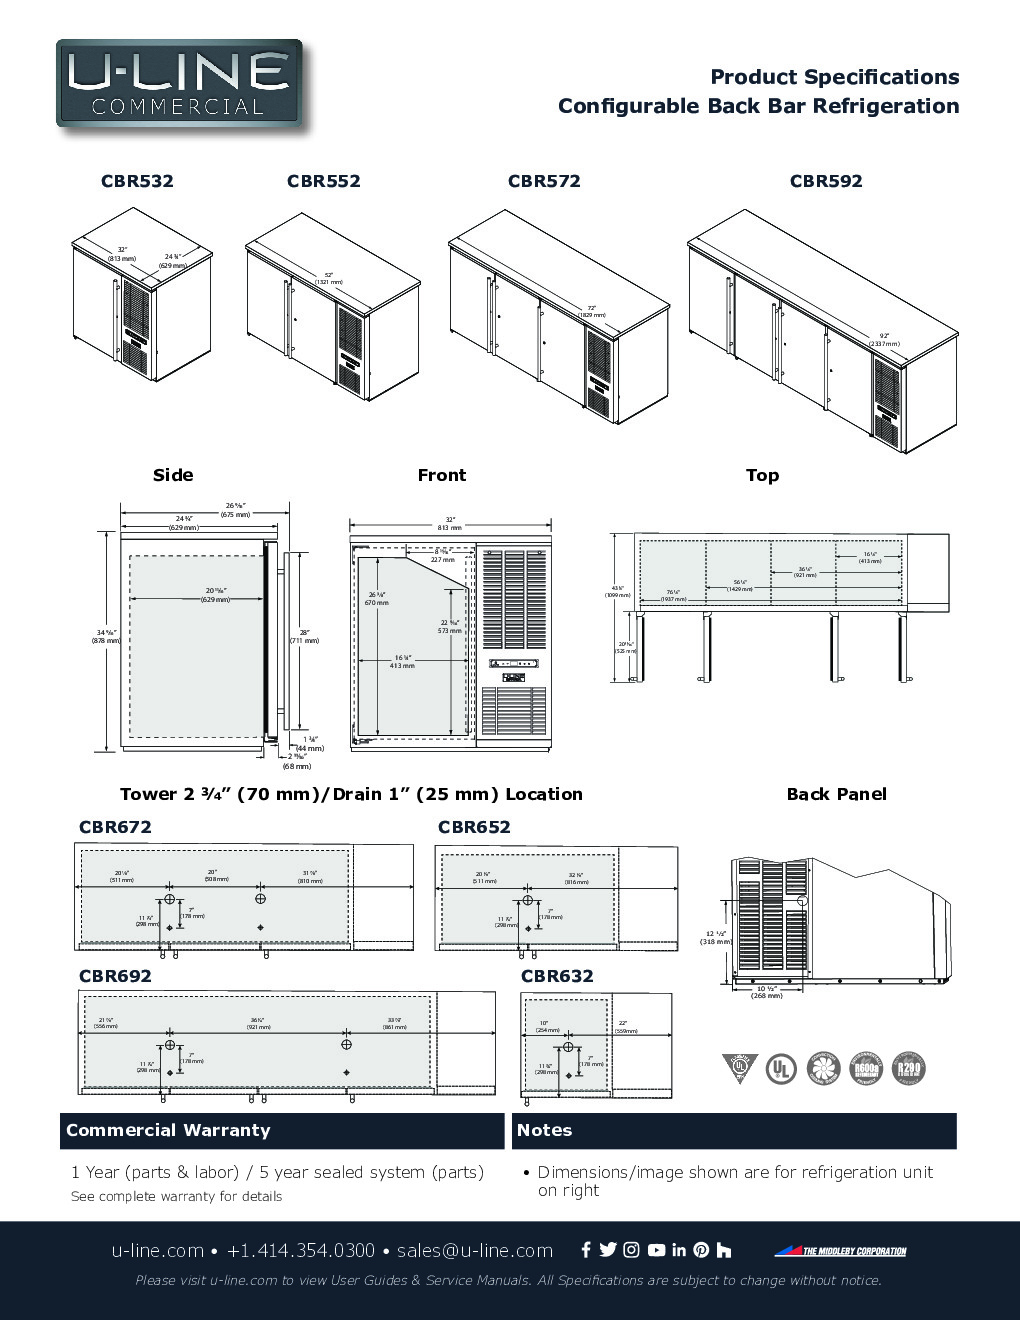 U-Line UCBR592-SG01A Refrigerated Back Bar Cabinet